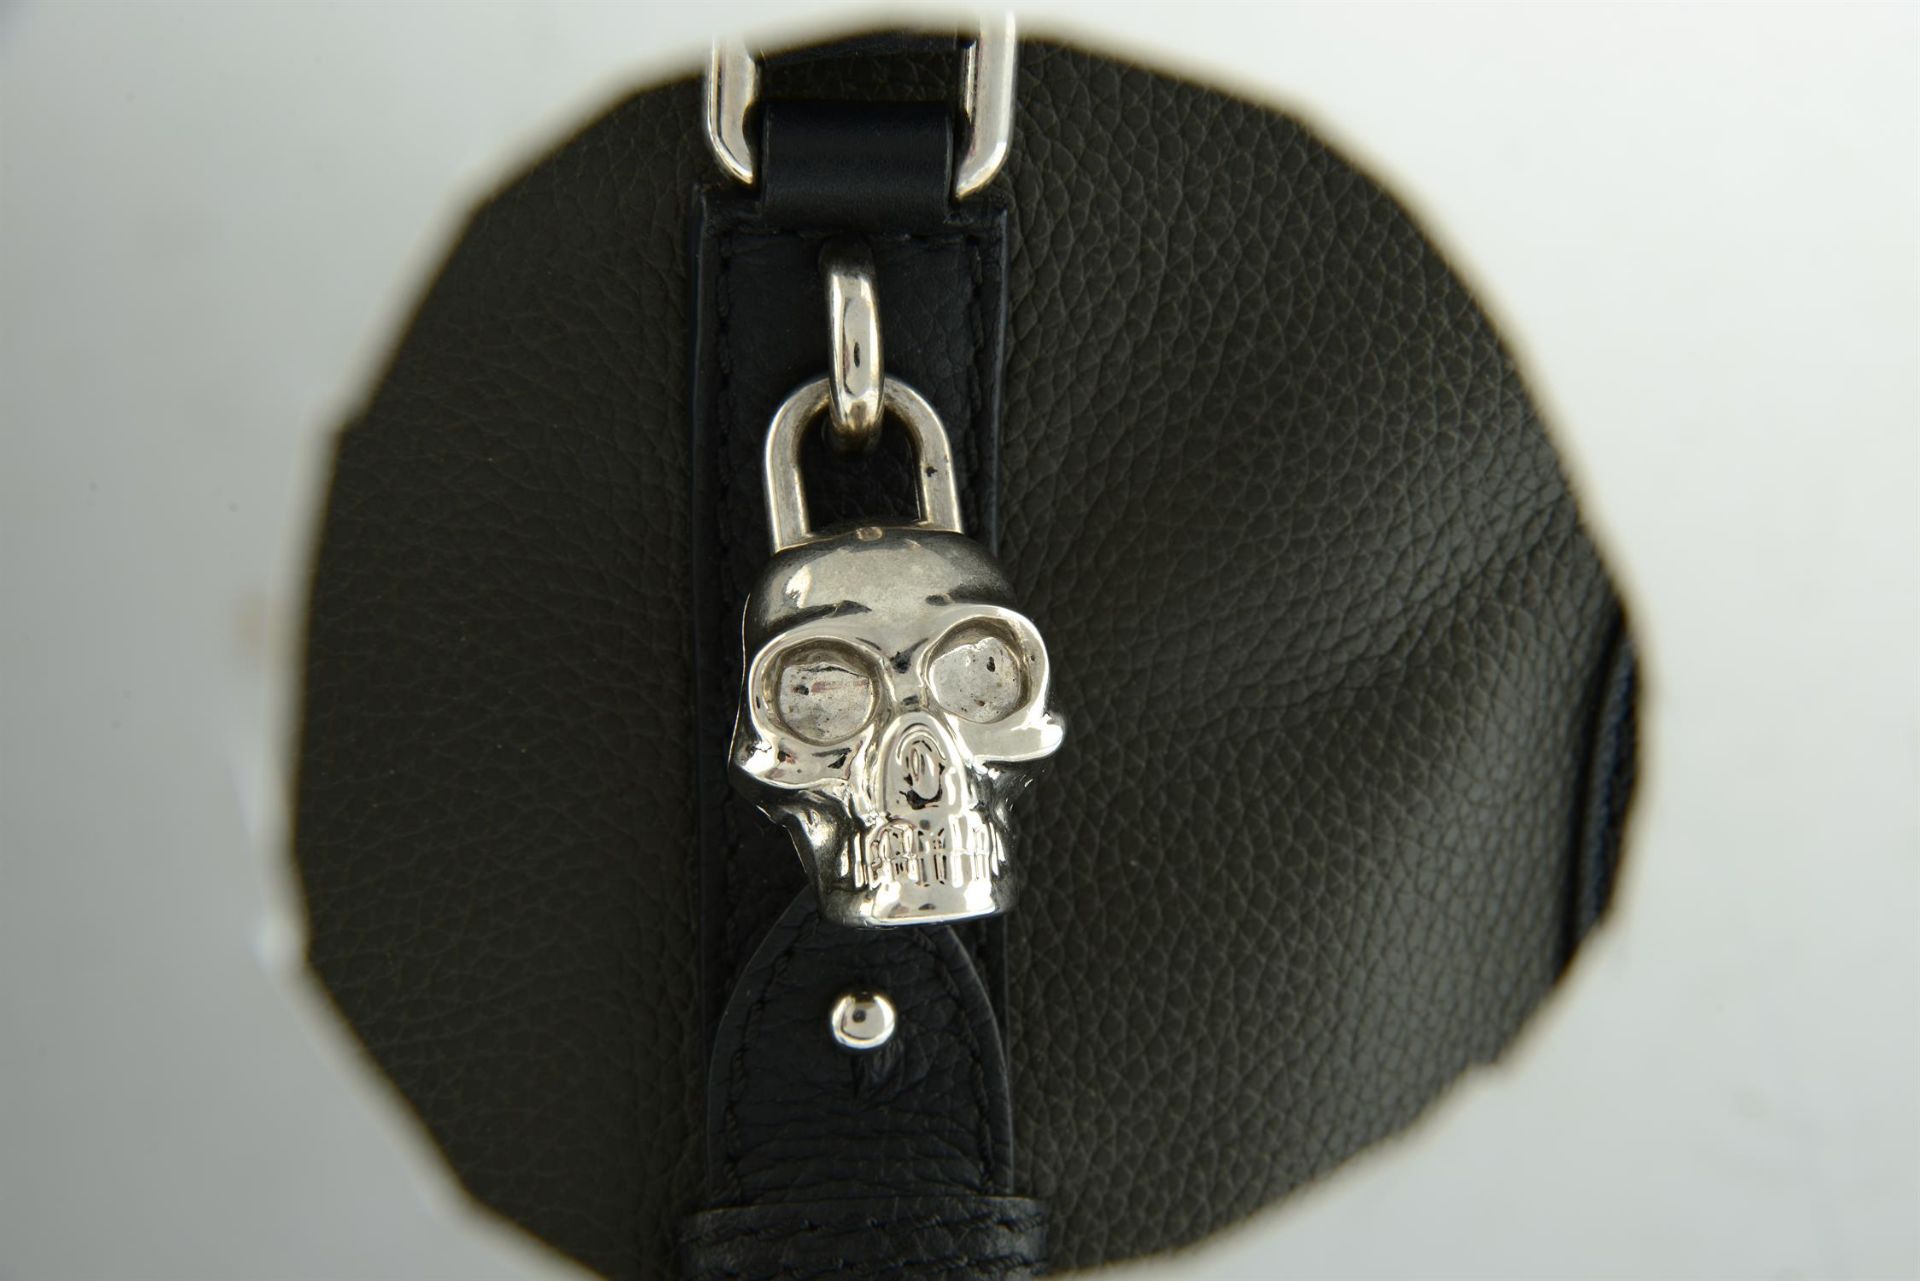 ALEXANDER MCQUEEN - a khaki and black leather handbag. - Image 5 of 6